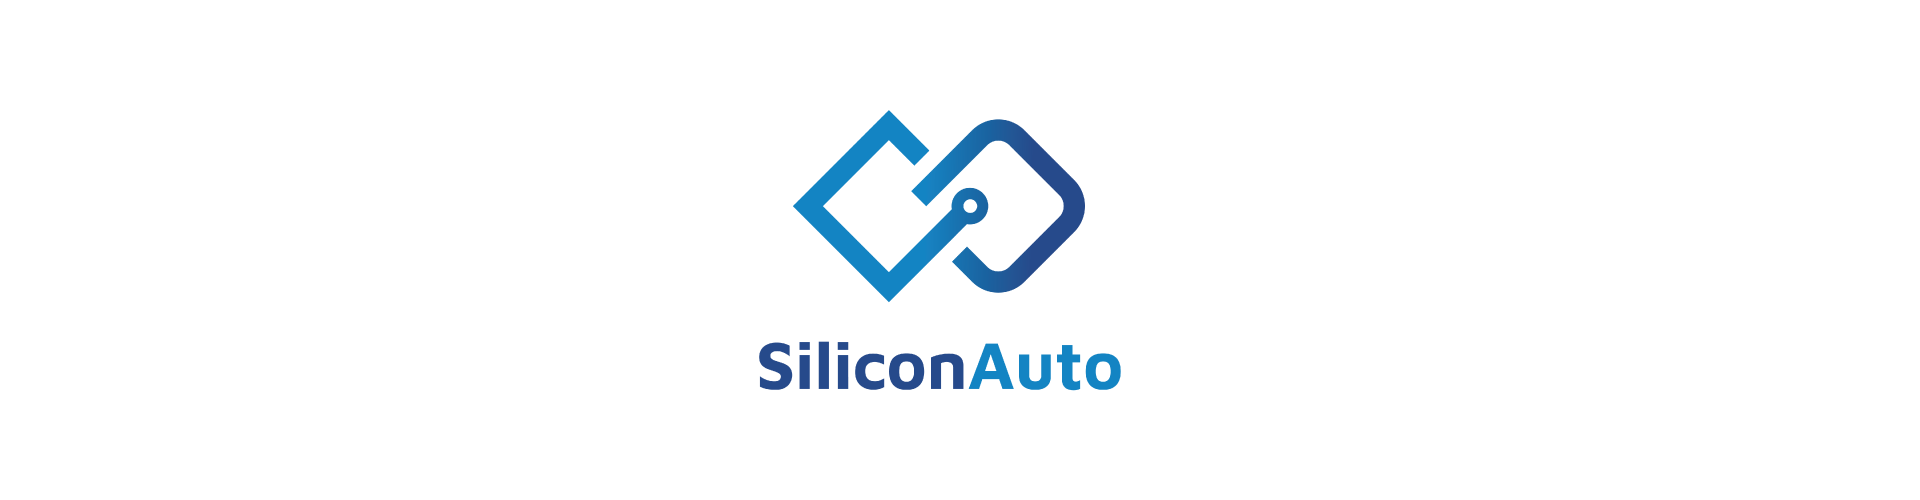 Image of Siliconauto logo